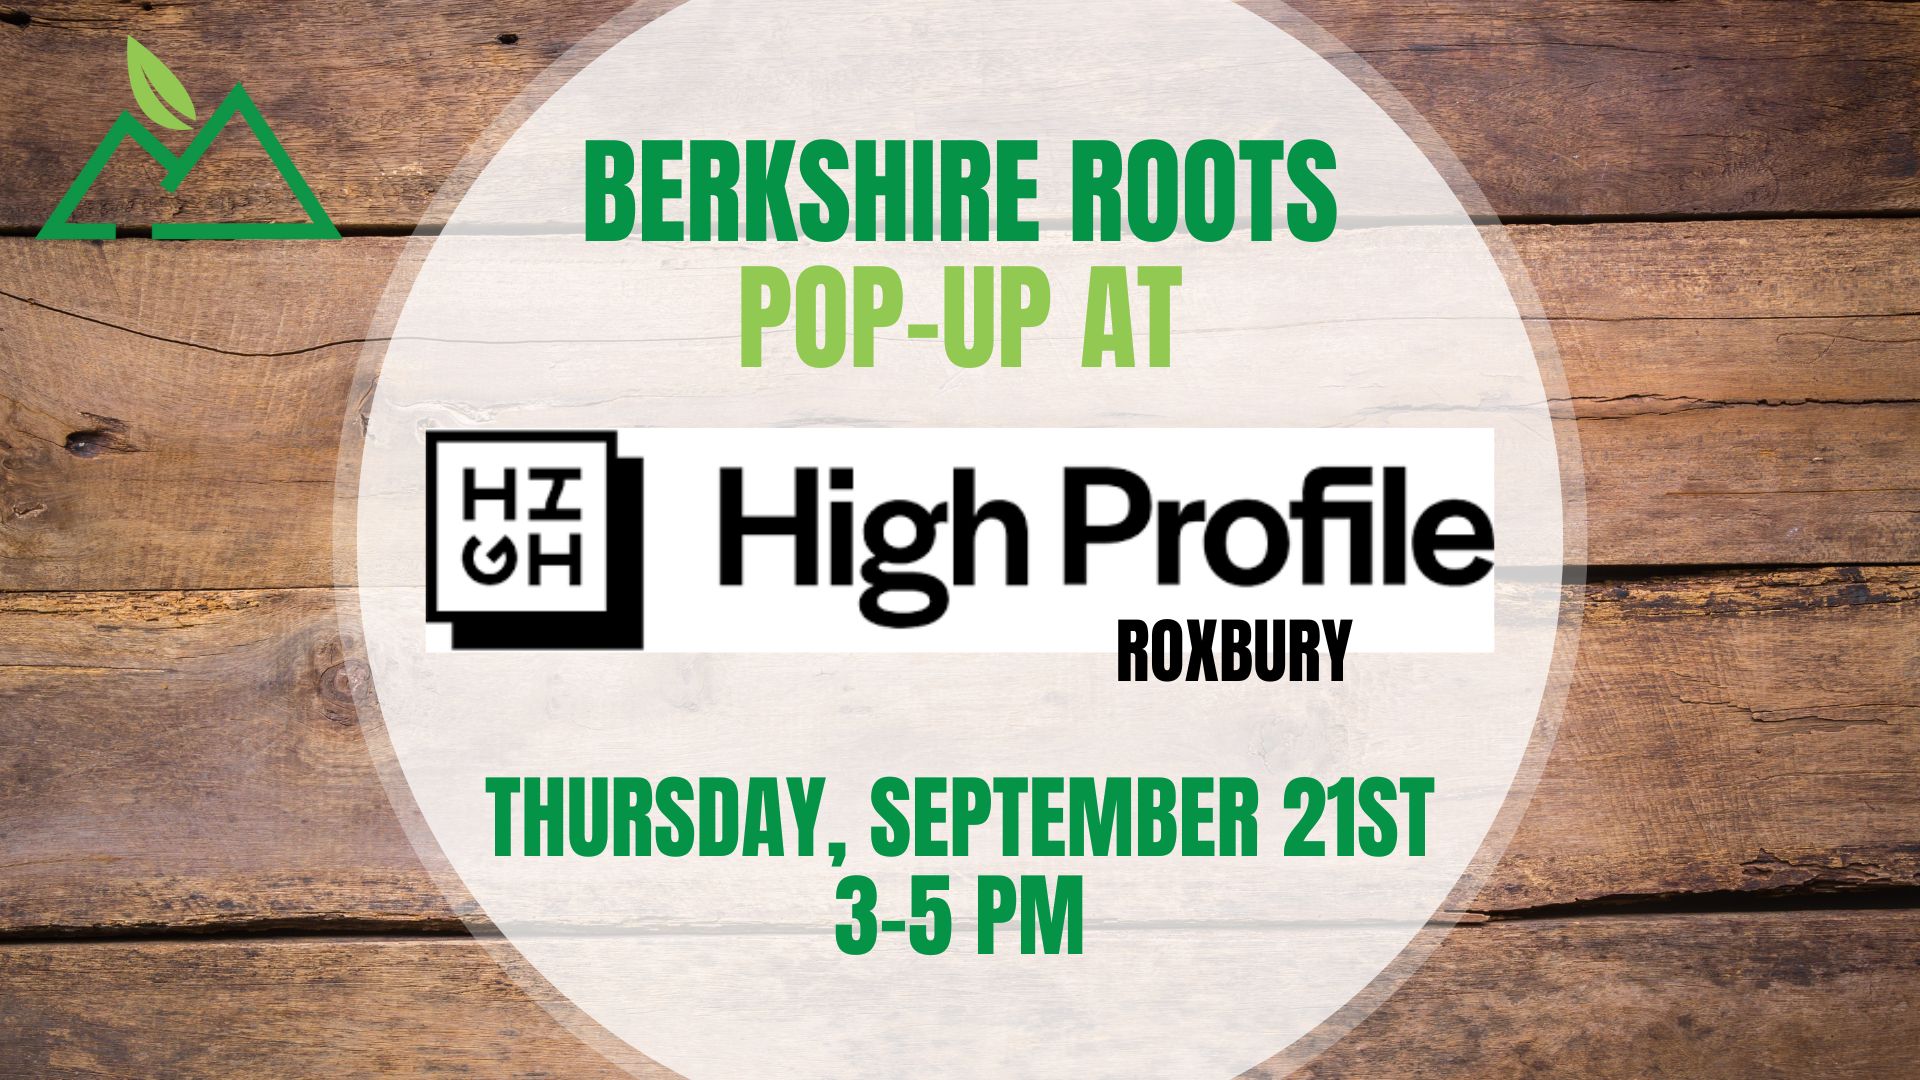 Berkshire Roots Pop Up at High Profile Budega in Roxbury